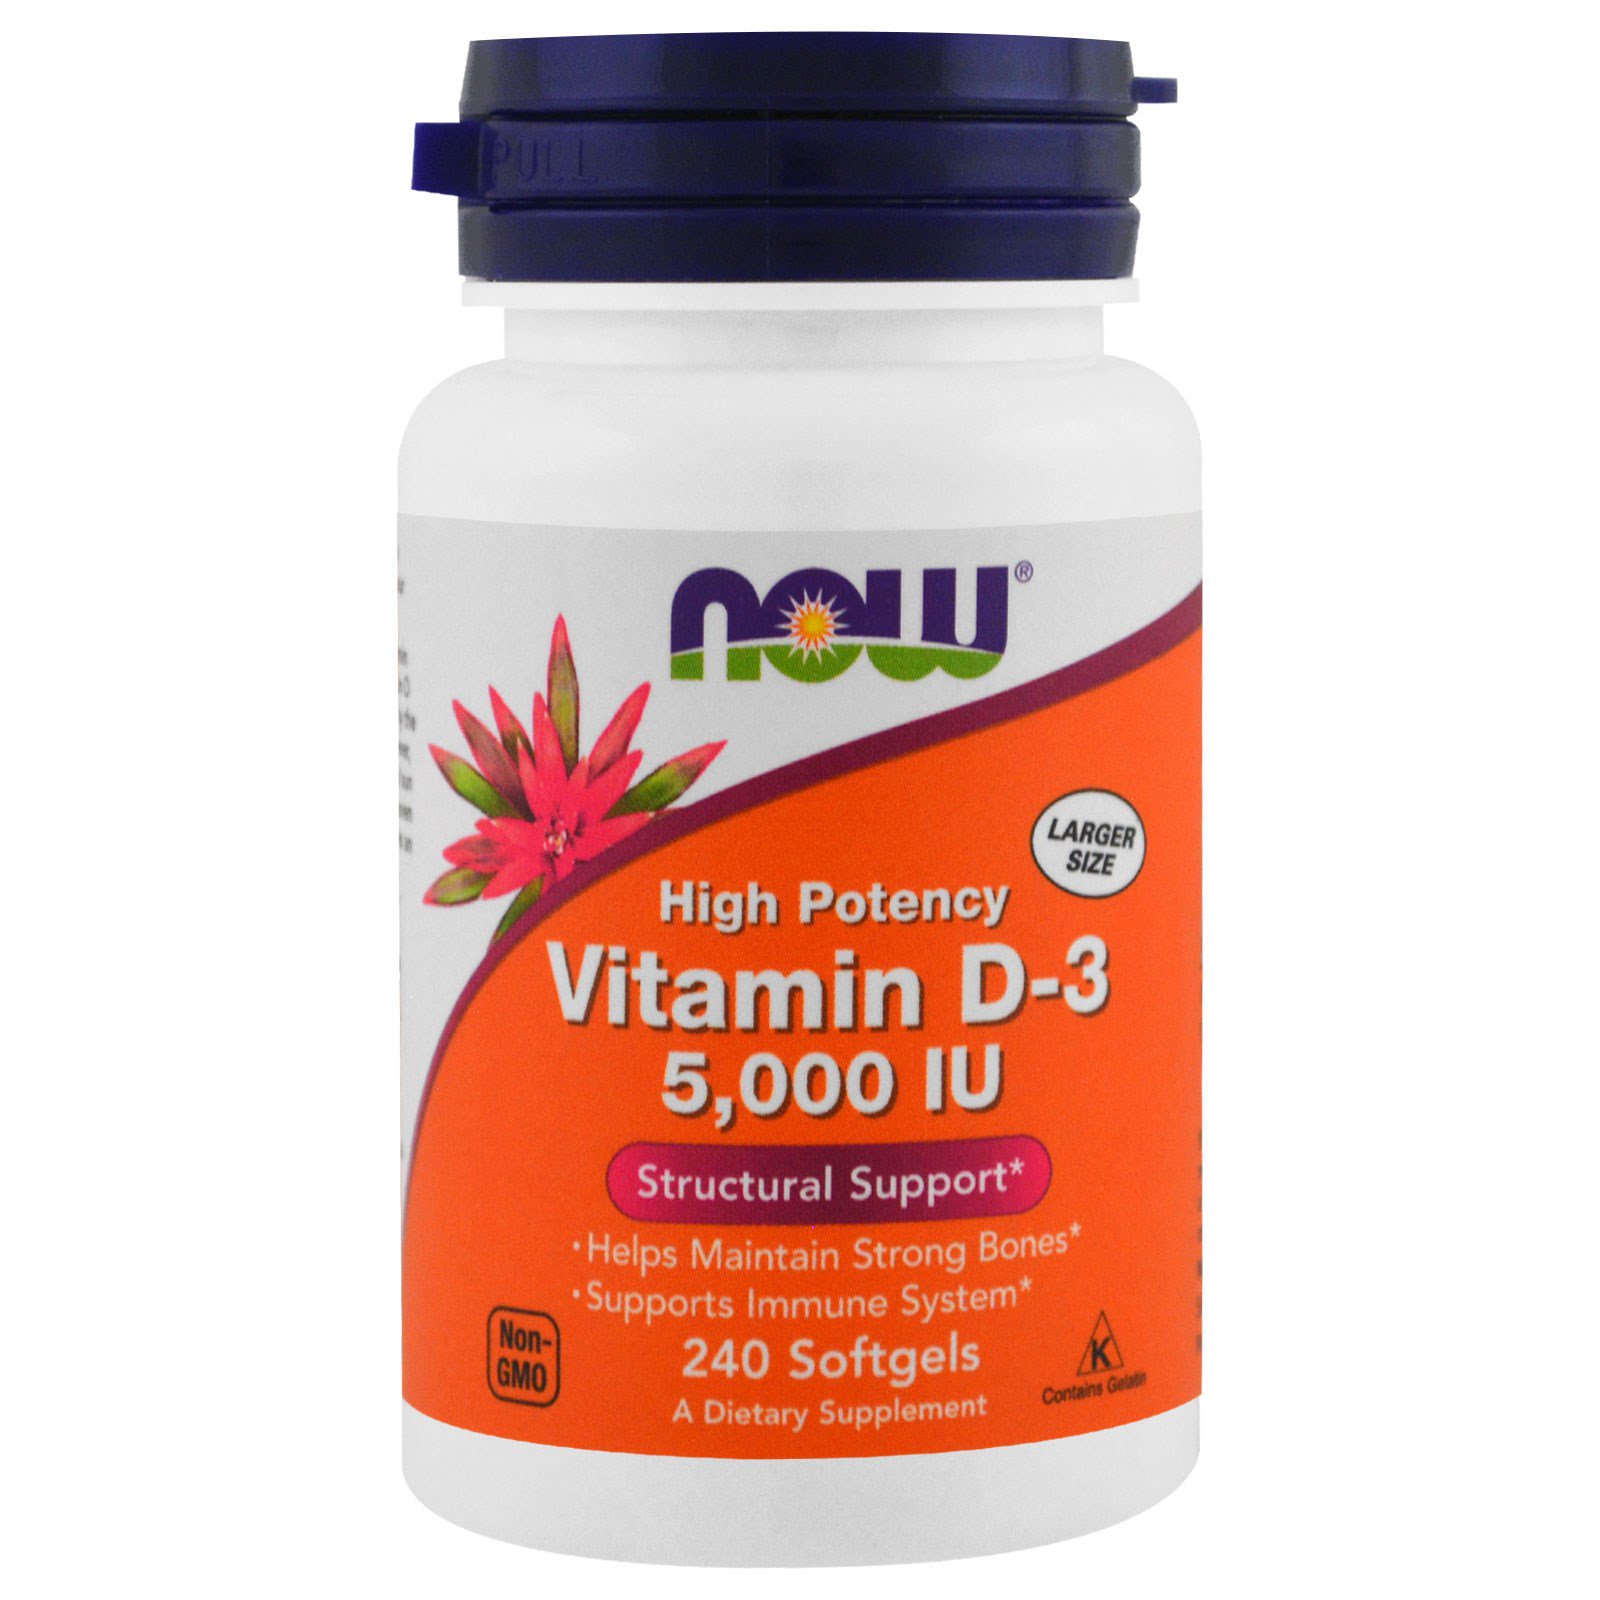 download vitamin d 2 50 000